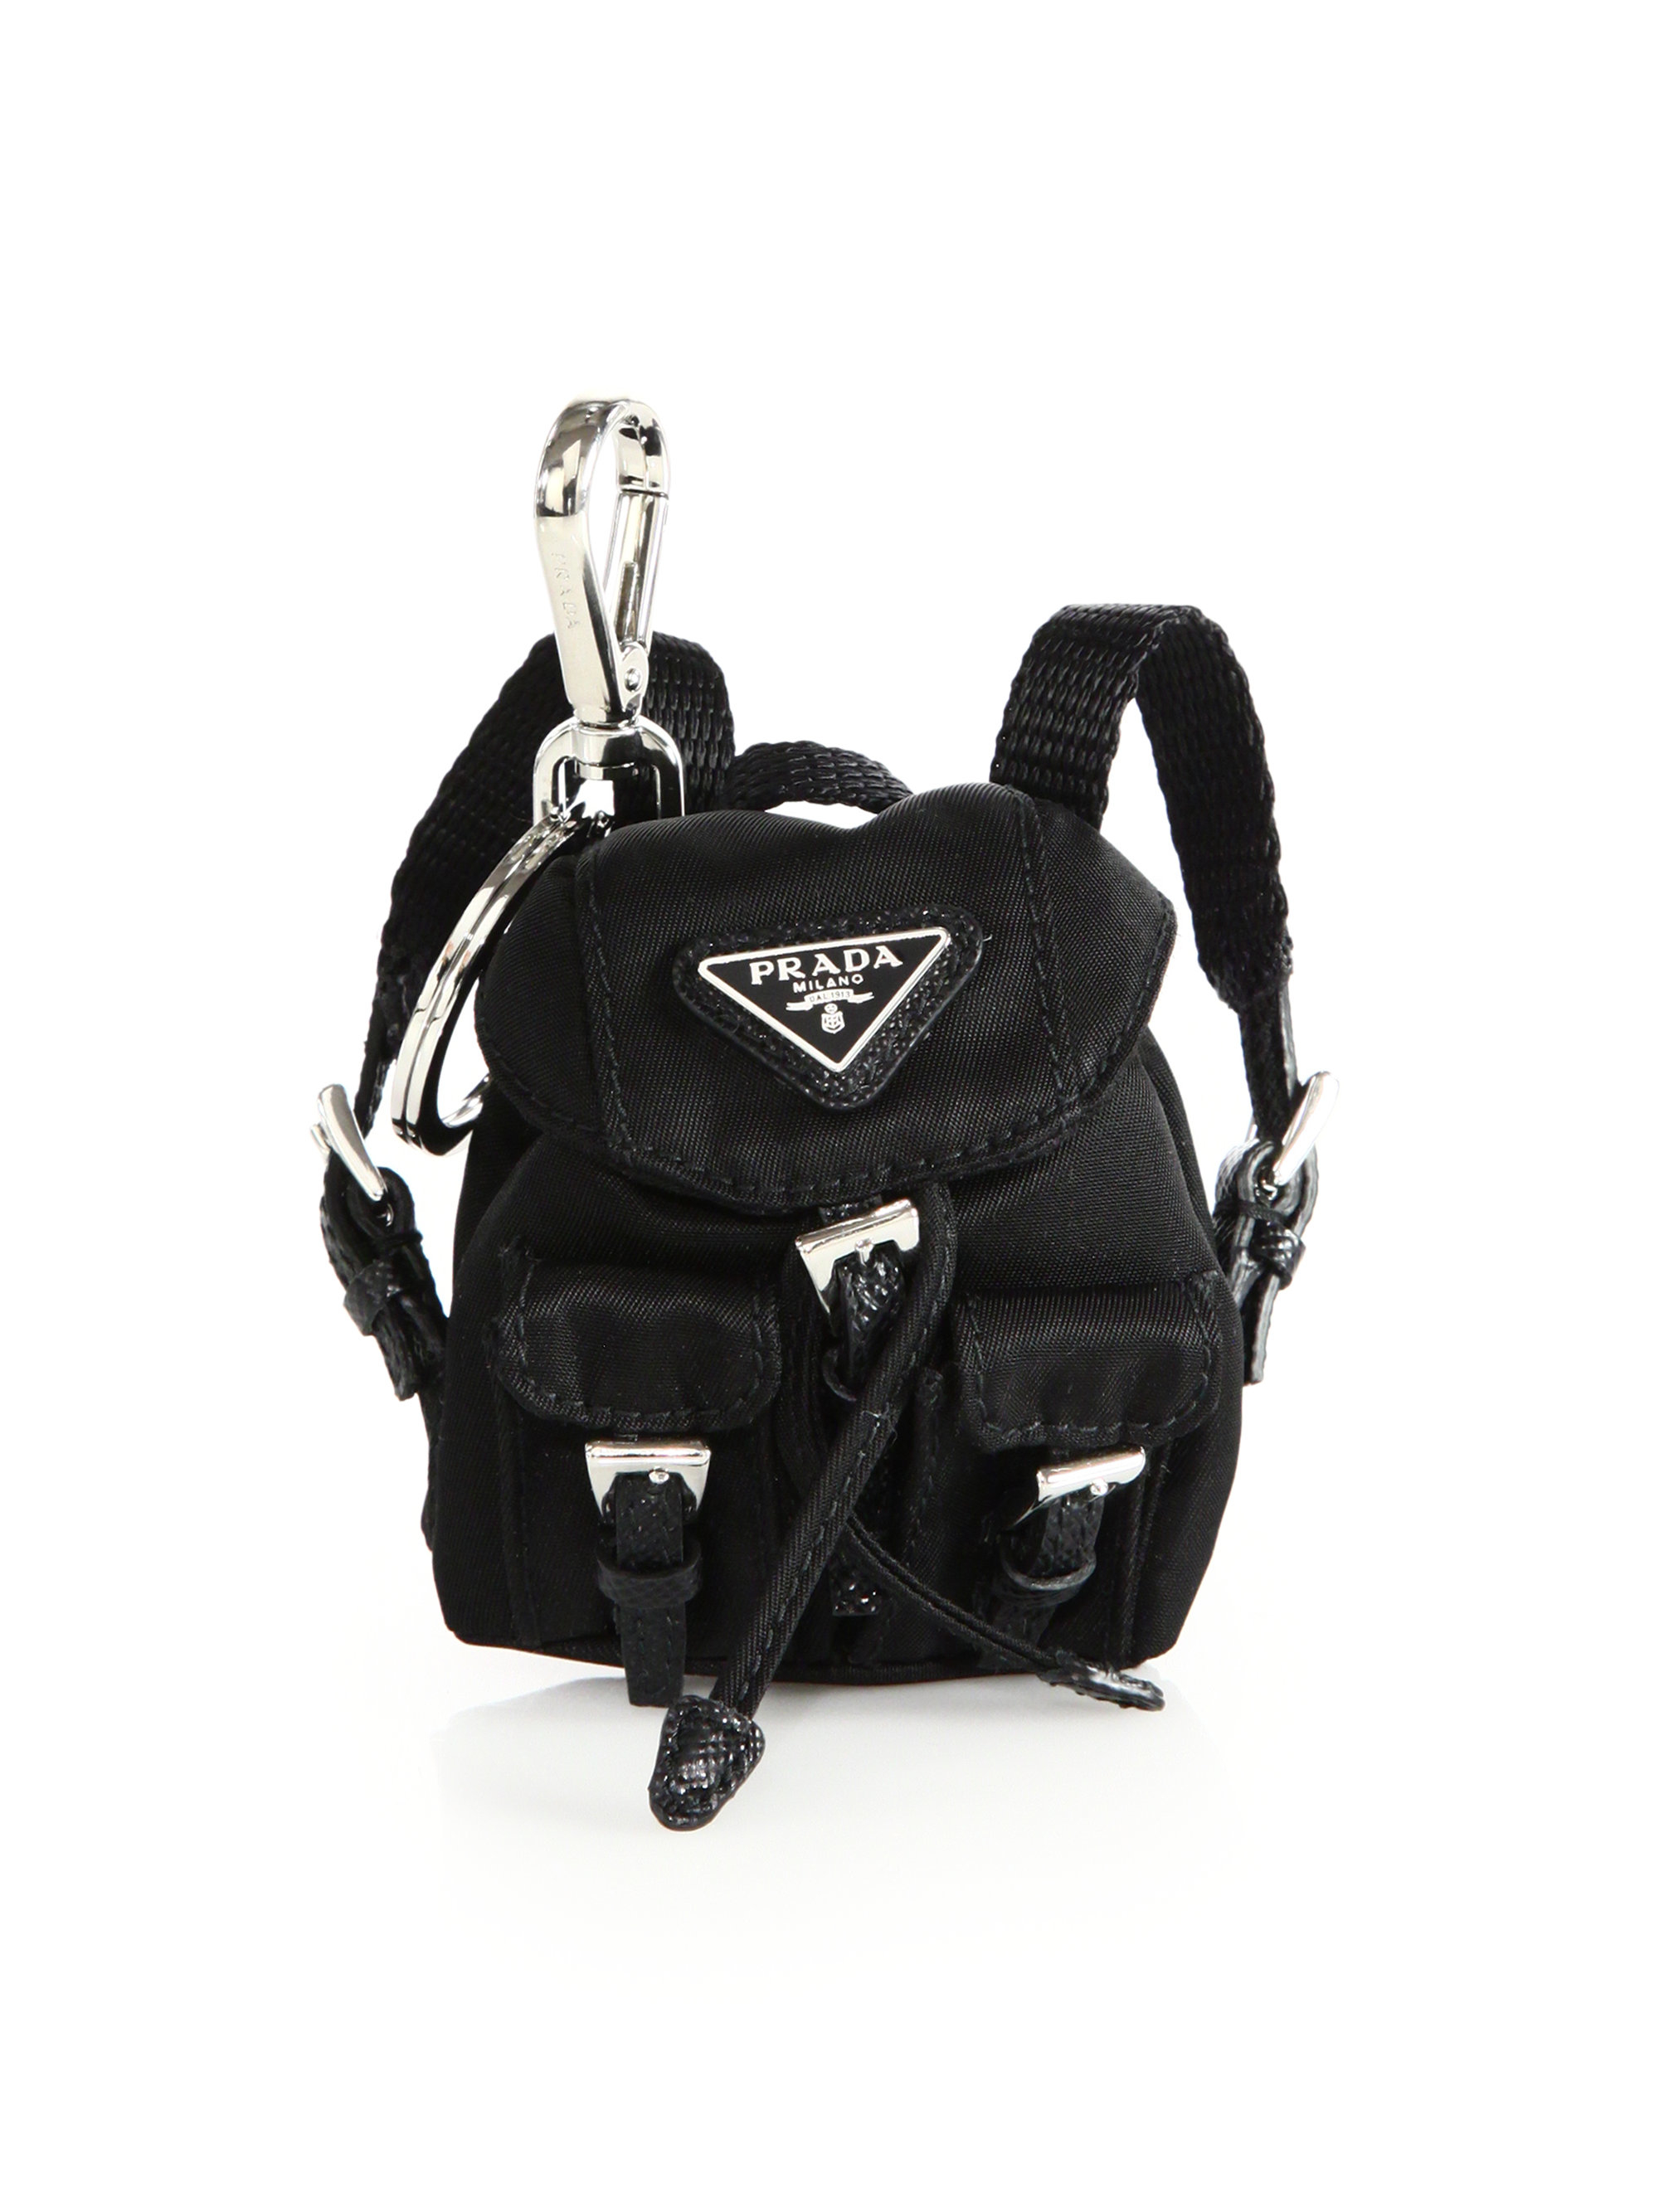 prada mens messenger bags - Prada Vela Backpack Keychain in Black (nero) | Lyst